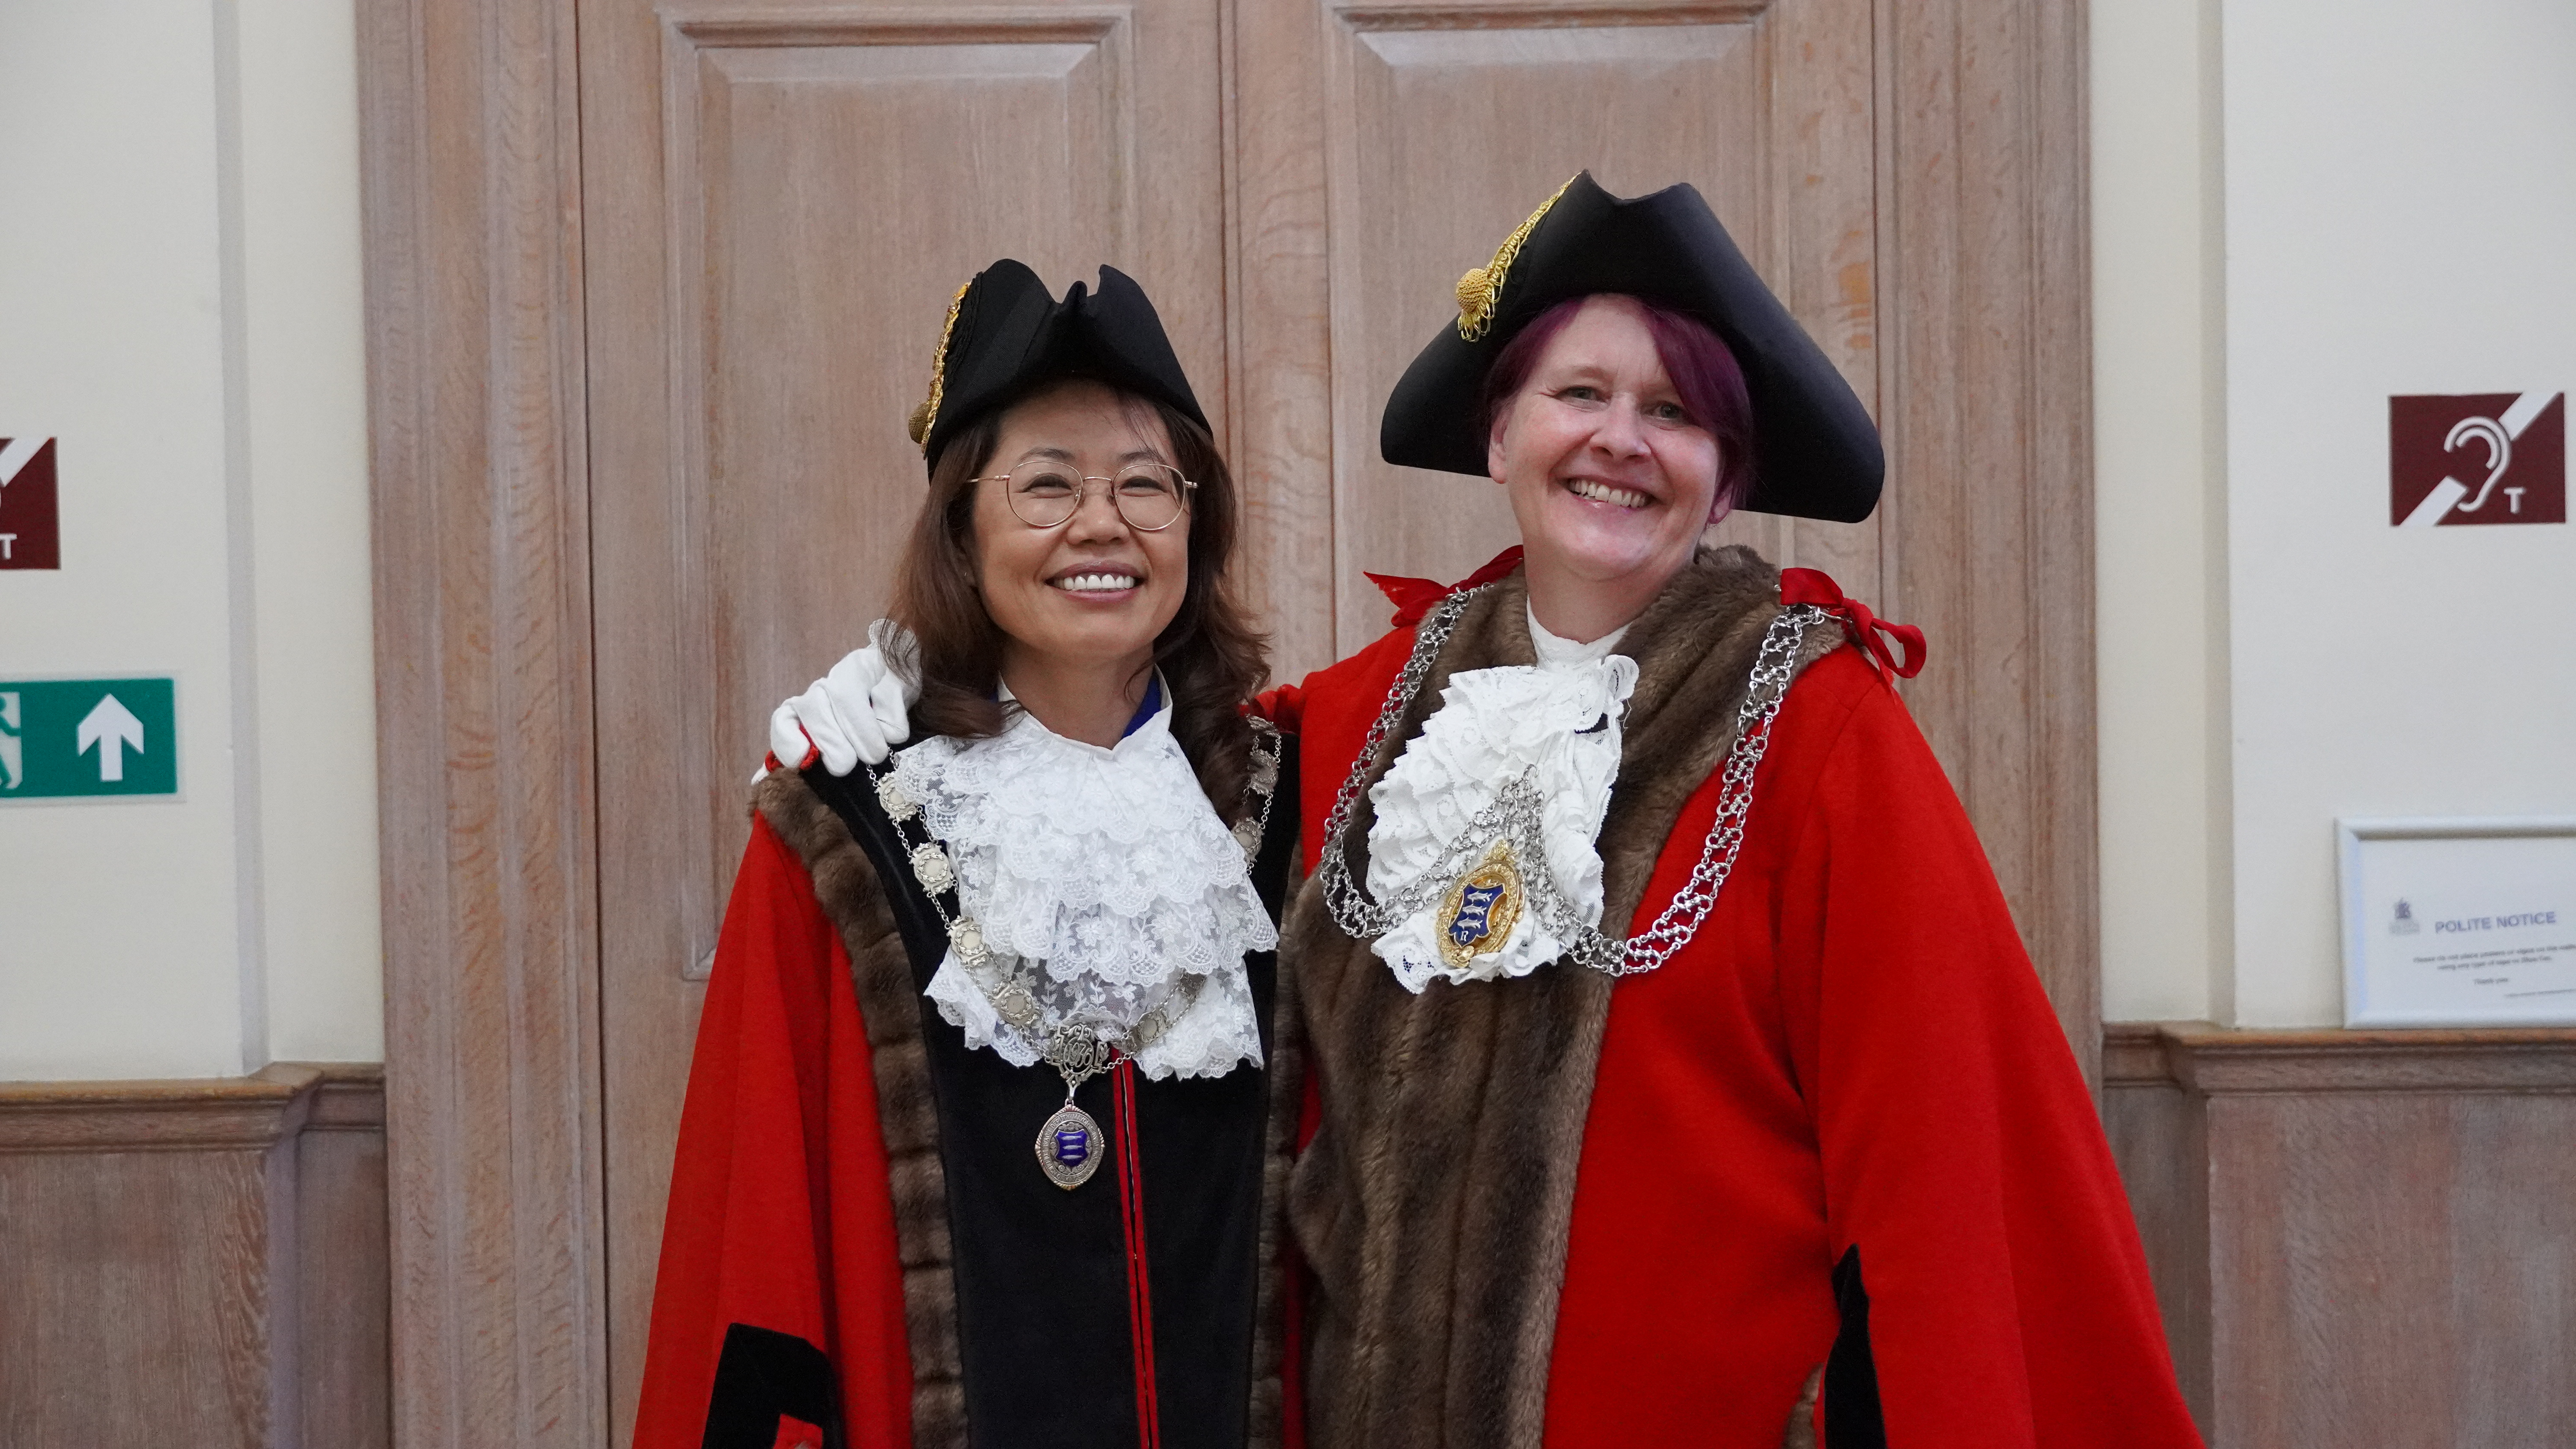 A photo of the new Mayor and Deputy Mayor of the Royal Borough of Kingston